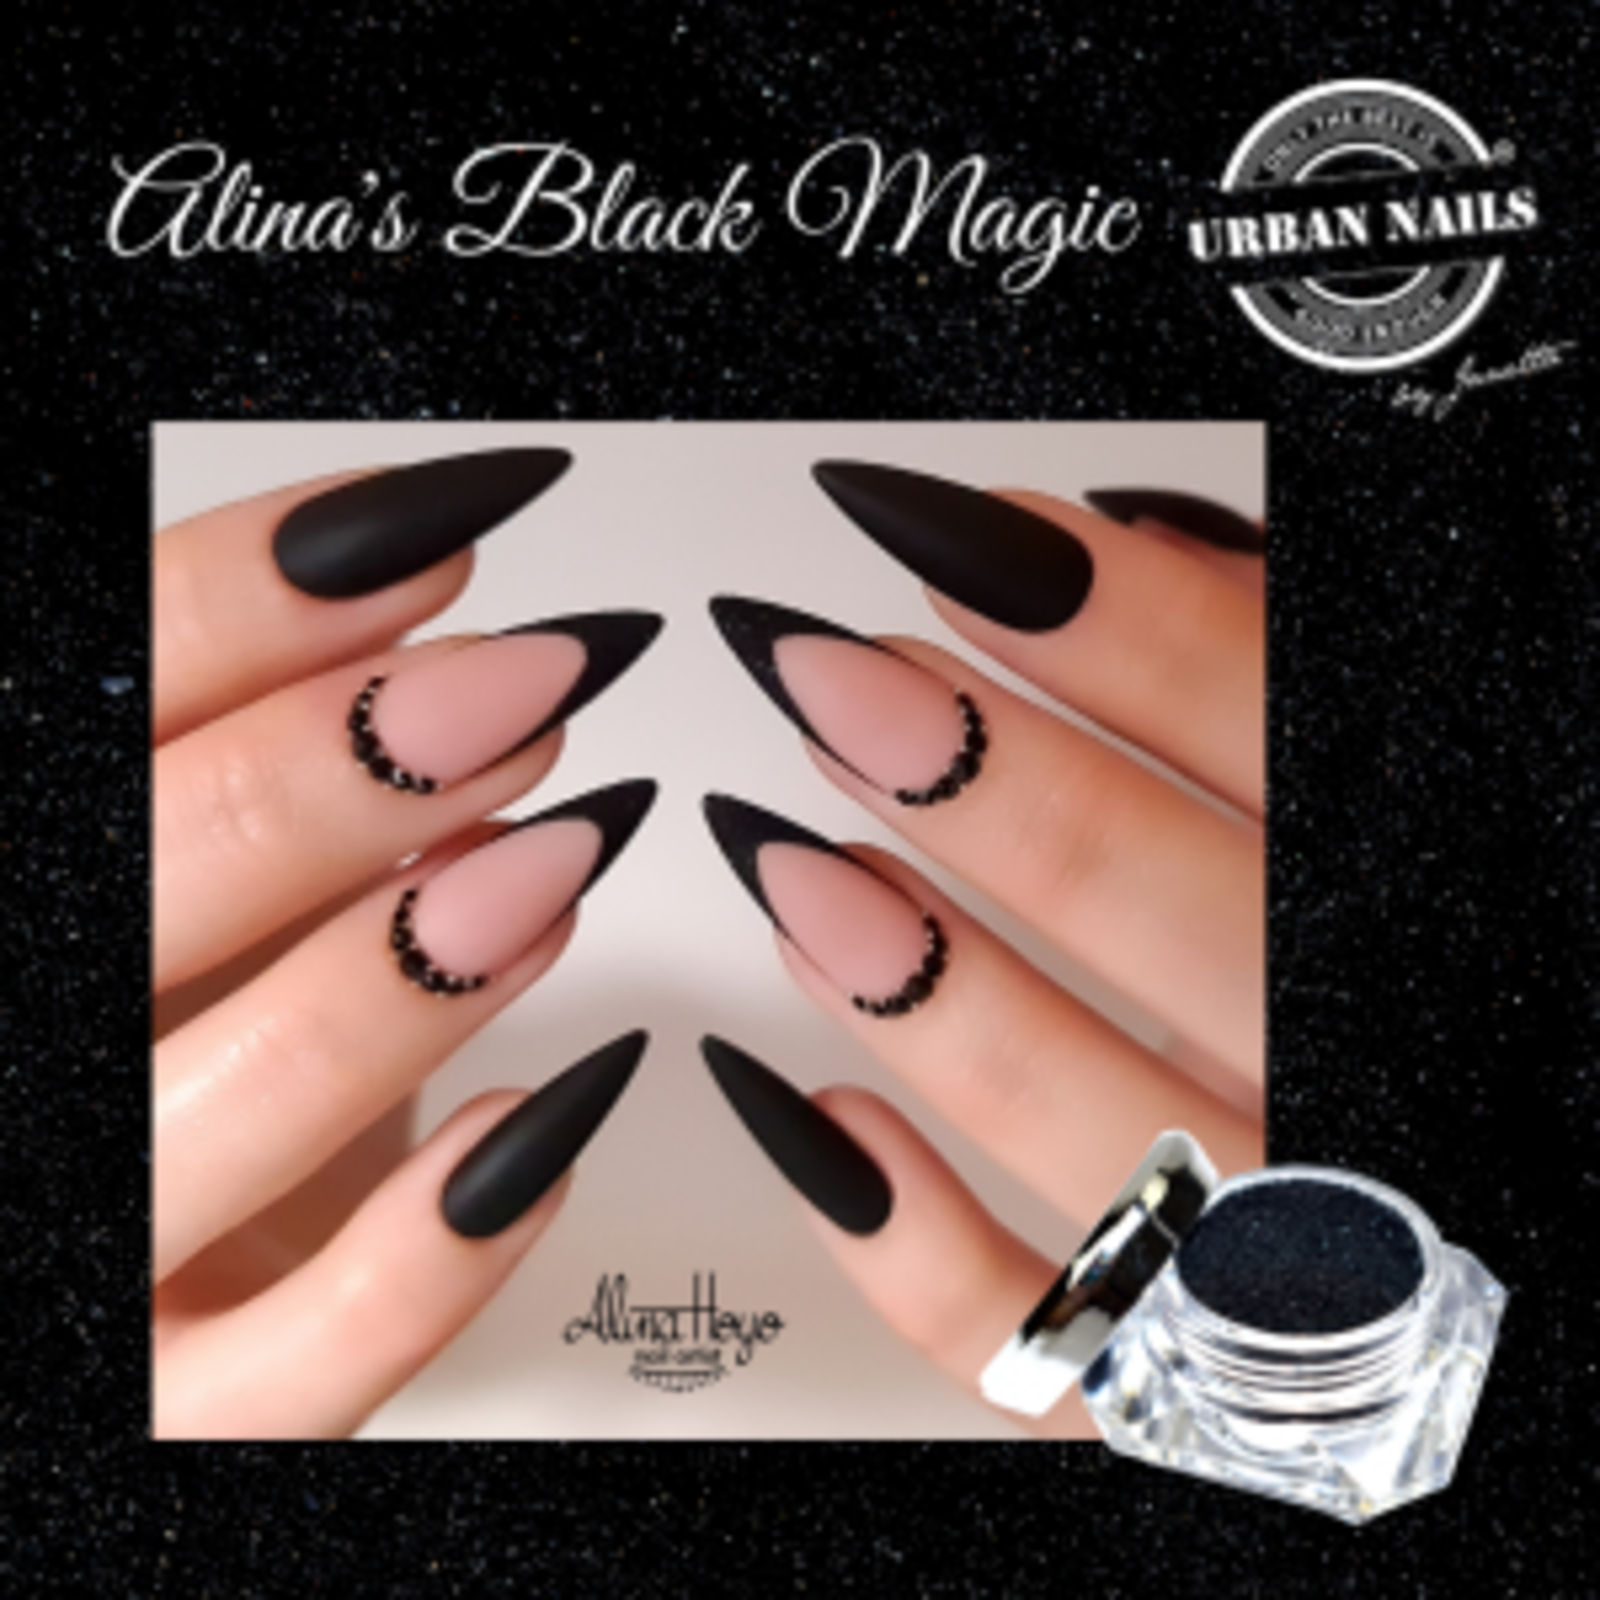 Urban nails Alina's black magic